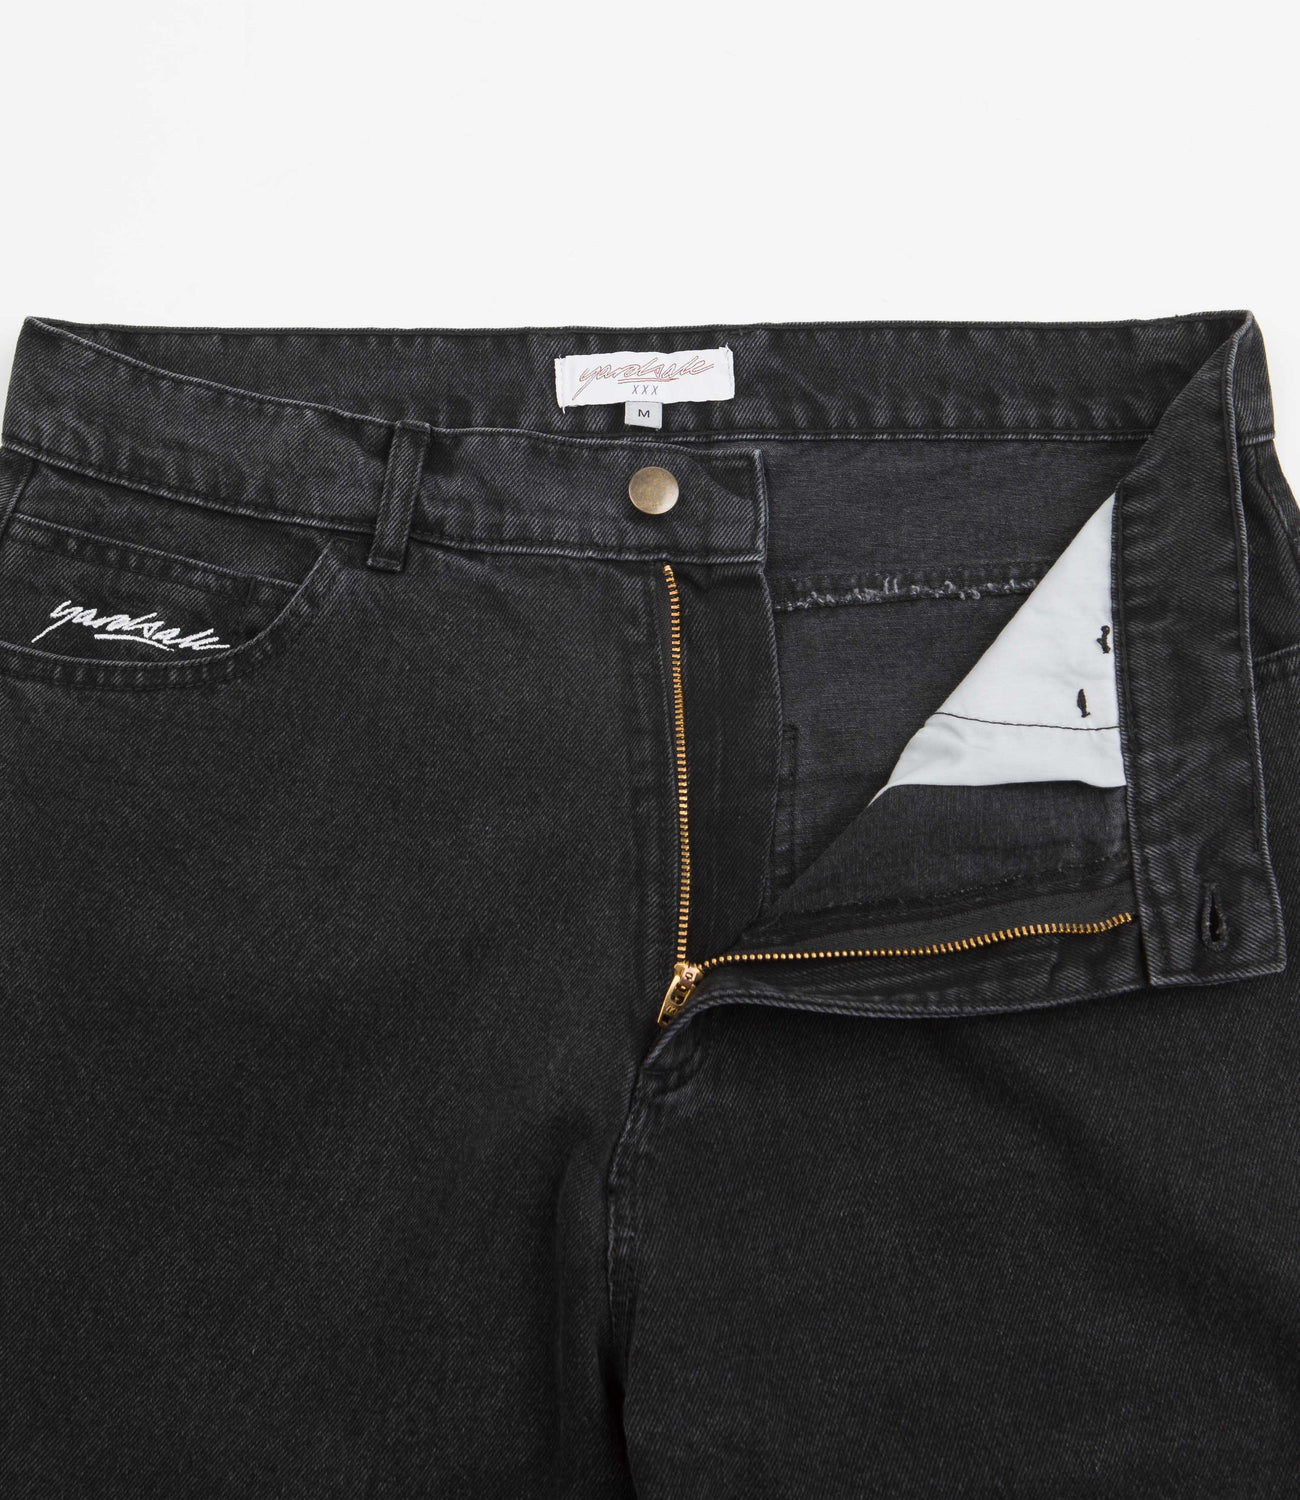 Yardsale Phantasy Jeans - Charcoal | Flatspot